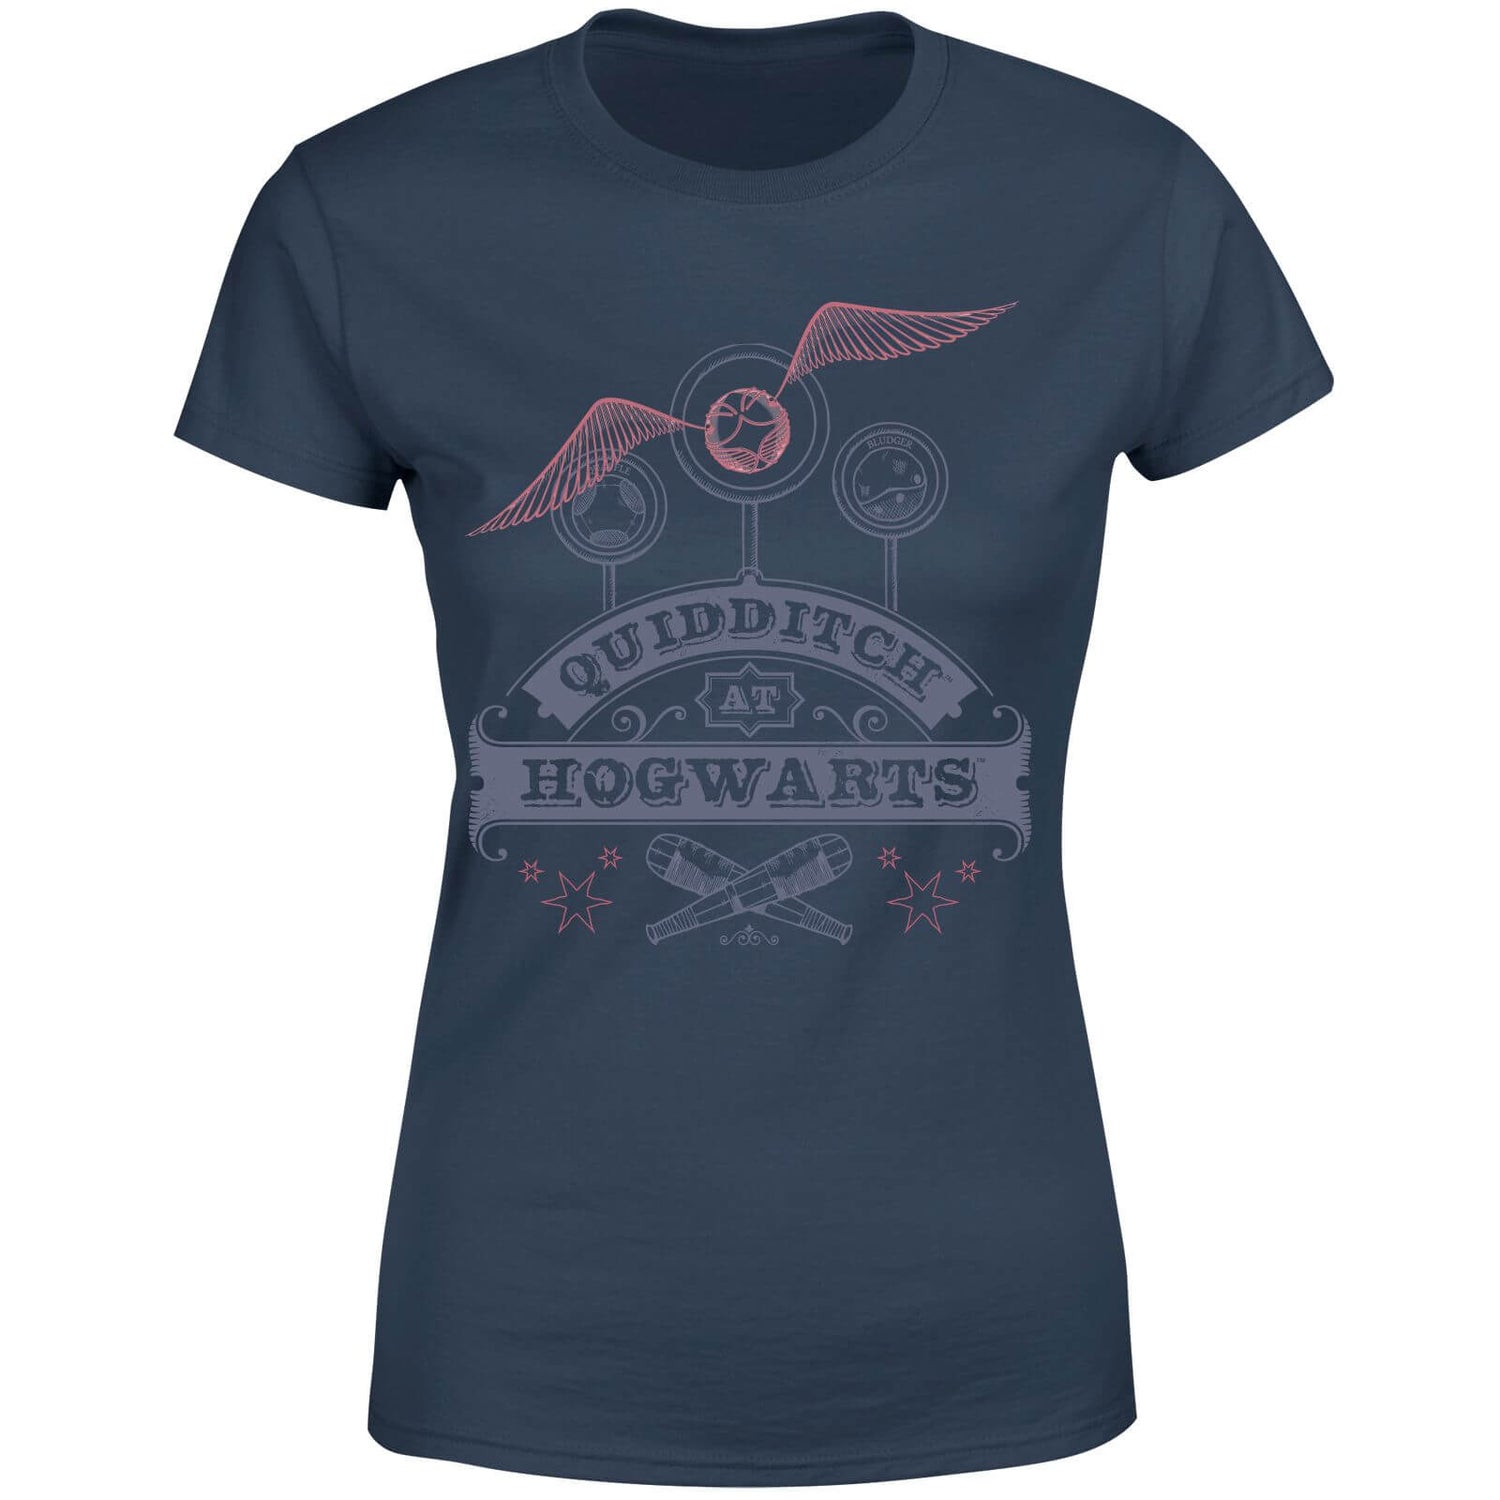 Harry Potter Quidditch At Hogwarts Women's T-Shirt - Navy